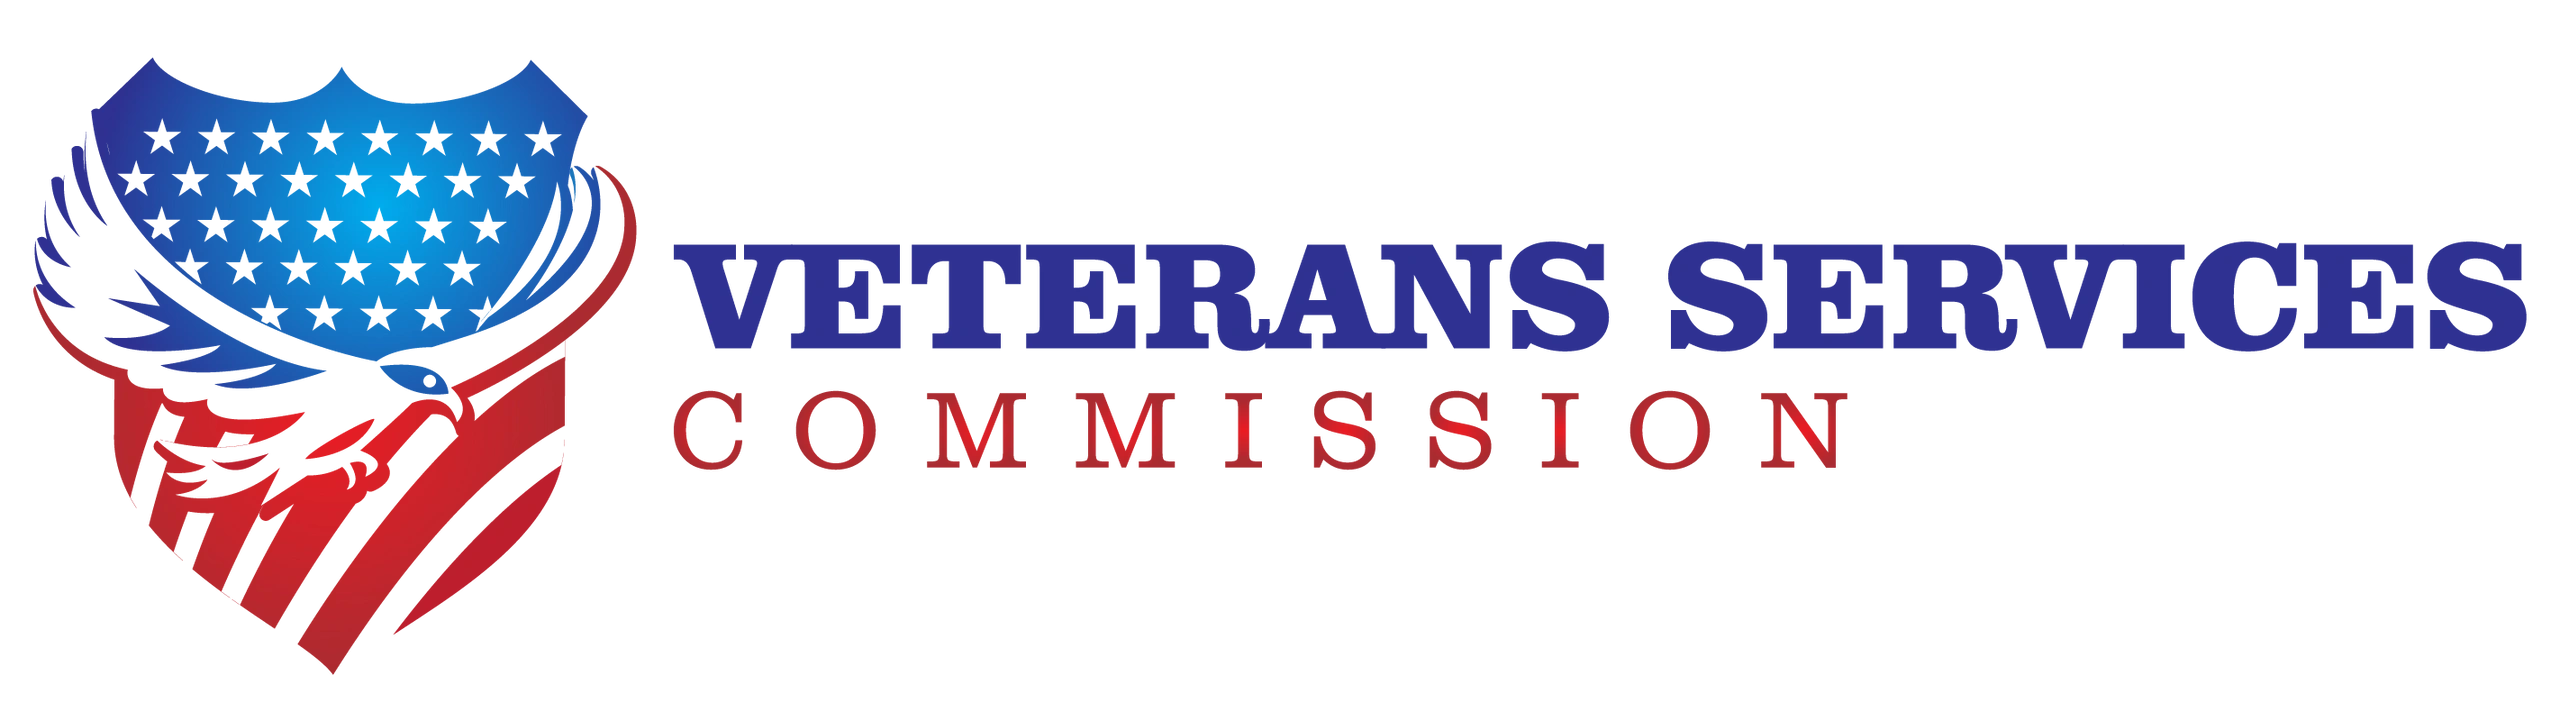 Veteran Services Commission